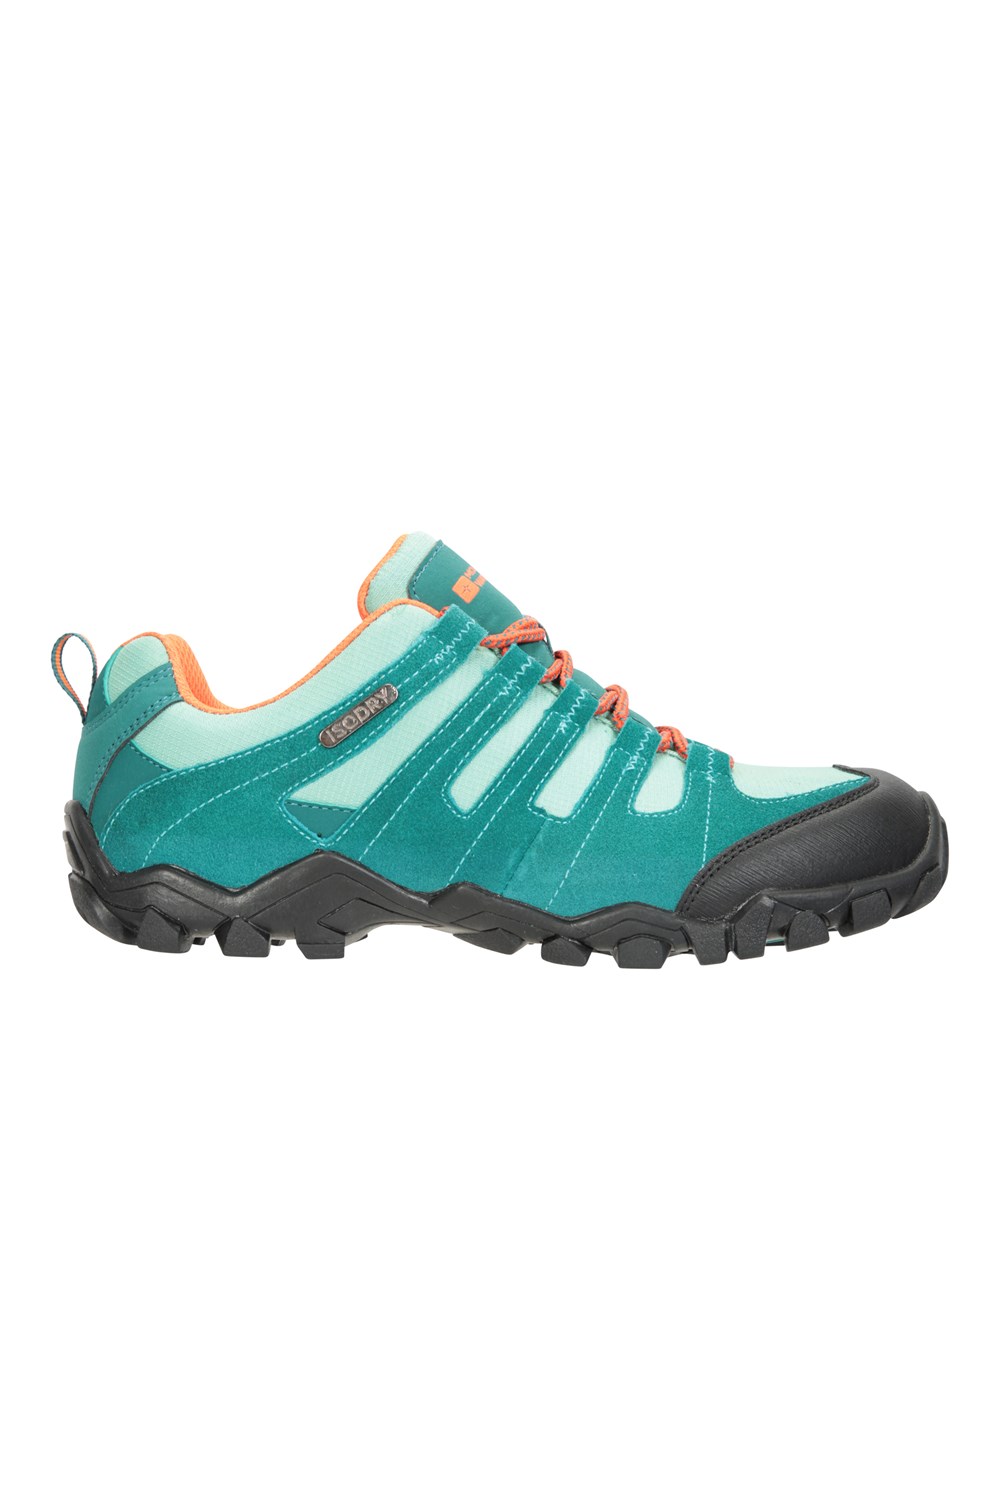 Mountain Warehouse Womens Belfour Walking Shoes Waterproof Ladies ...